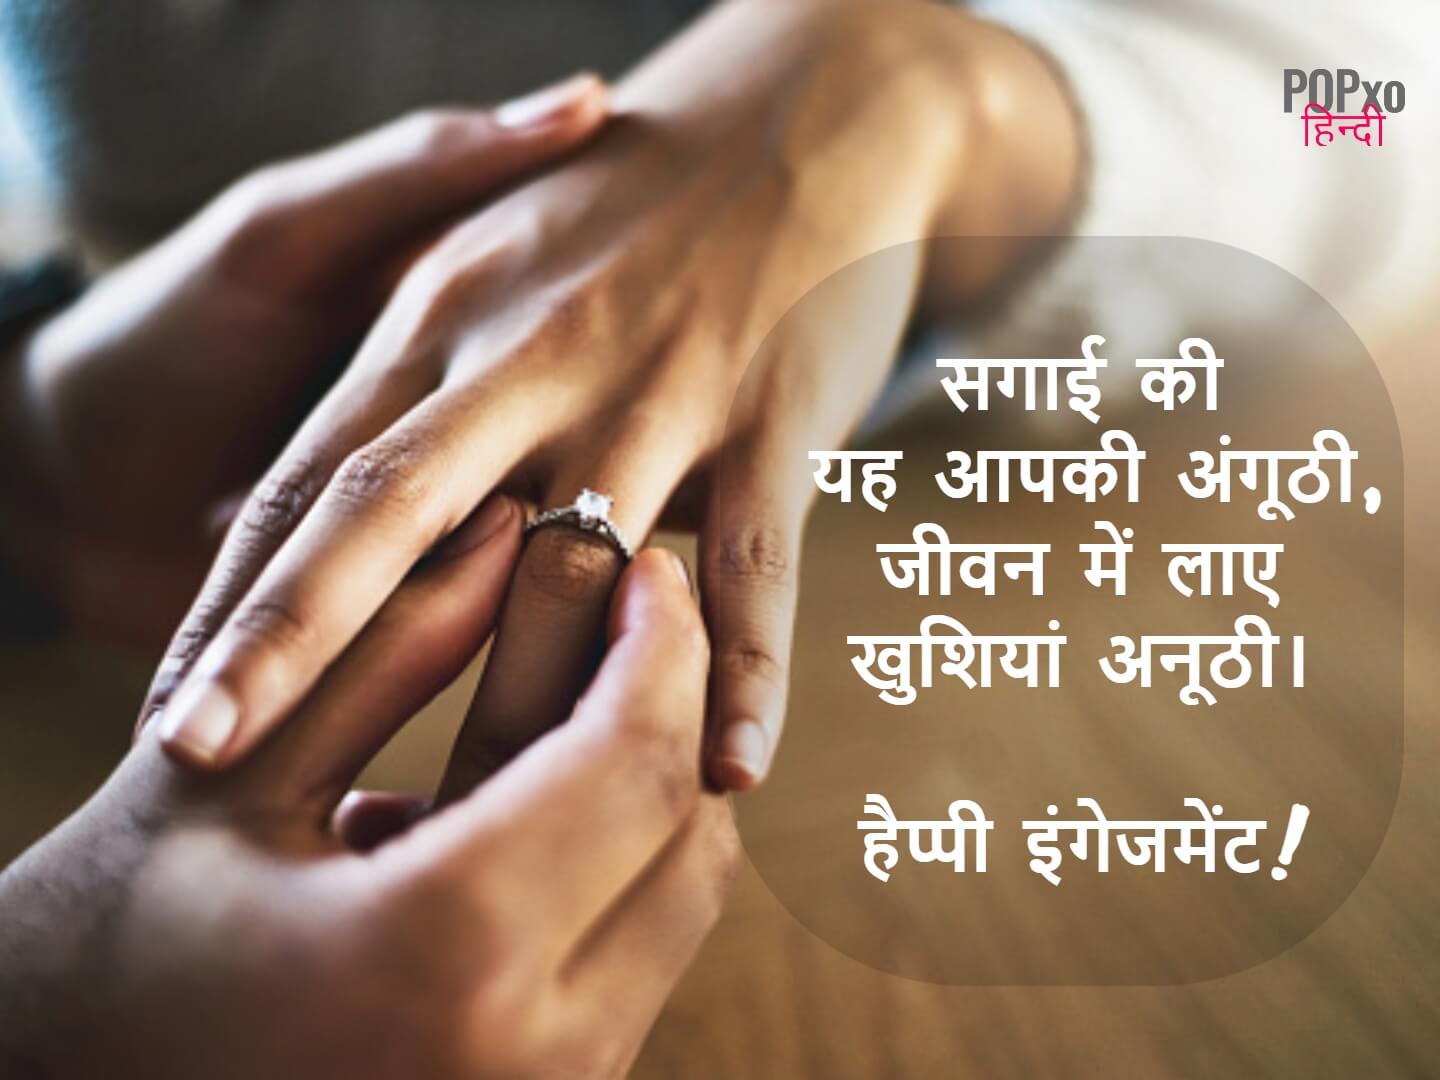 sapne me Wedding Rings dekhna | सपने में शादी की अंगूठी💍देखना | Engagement  Dream Meaning in hindi - YouTube